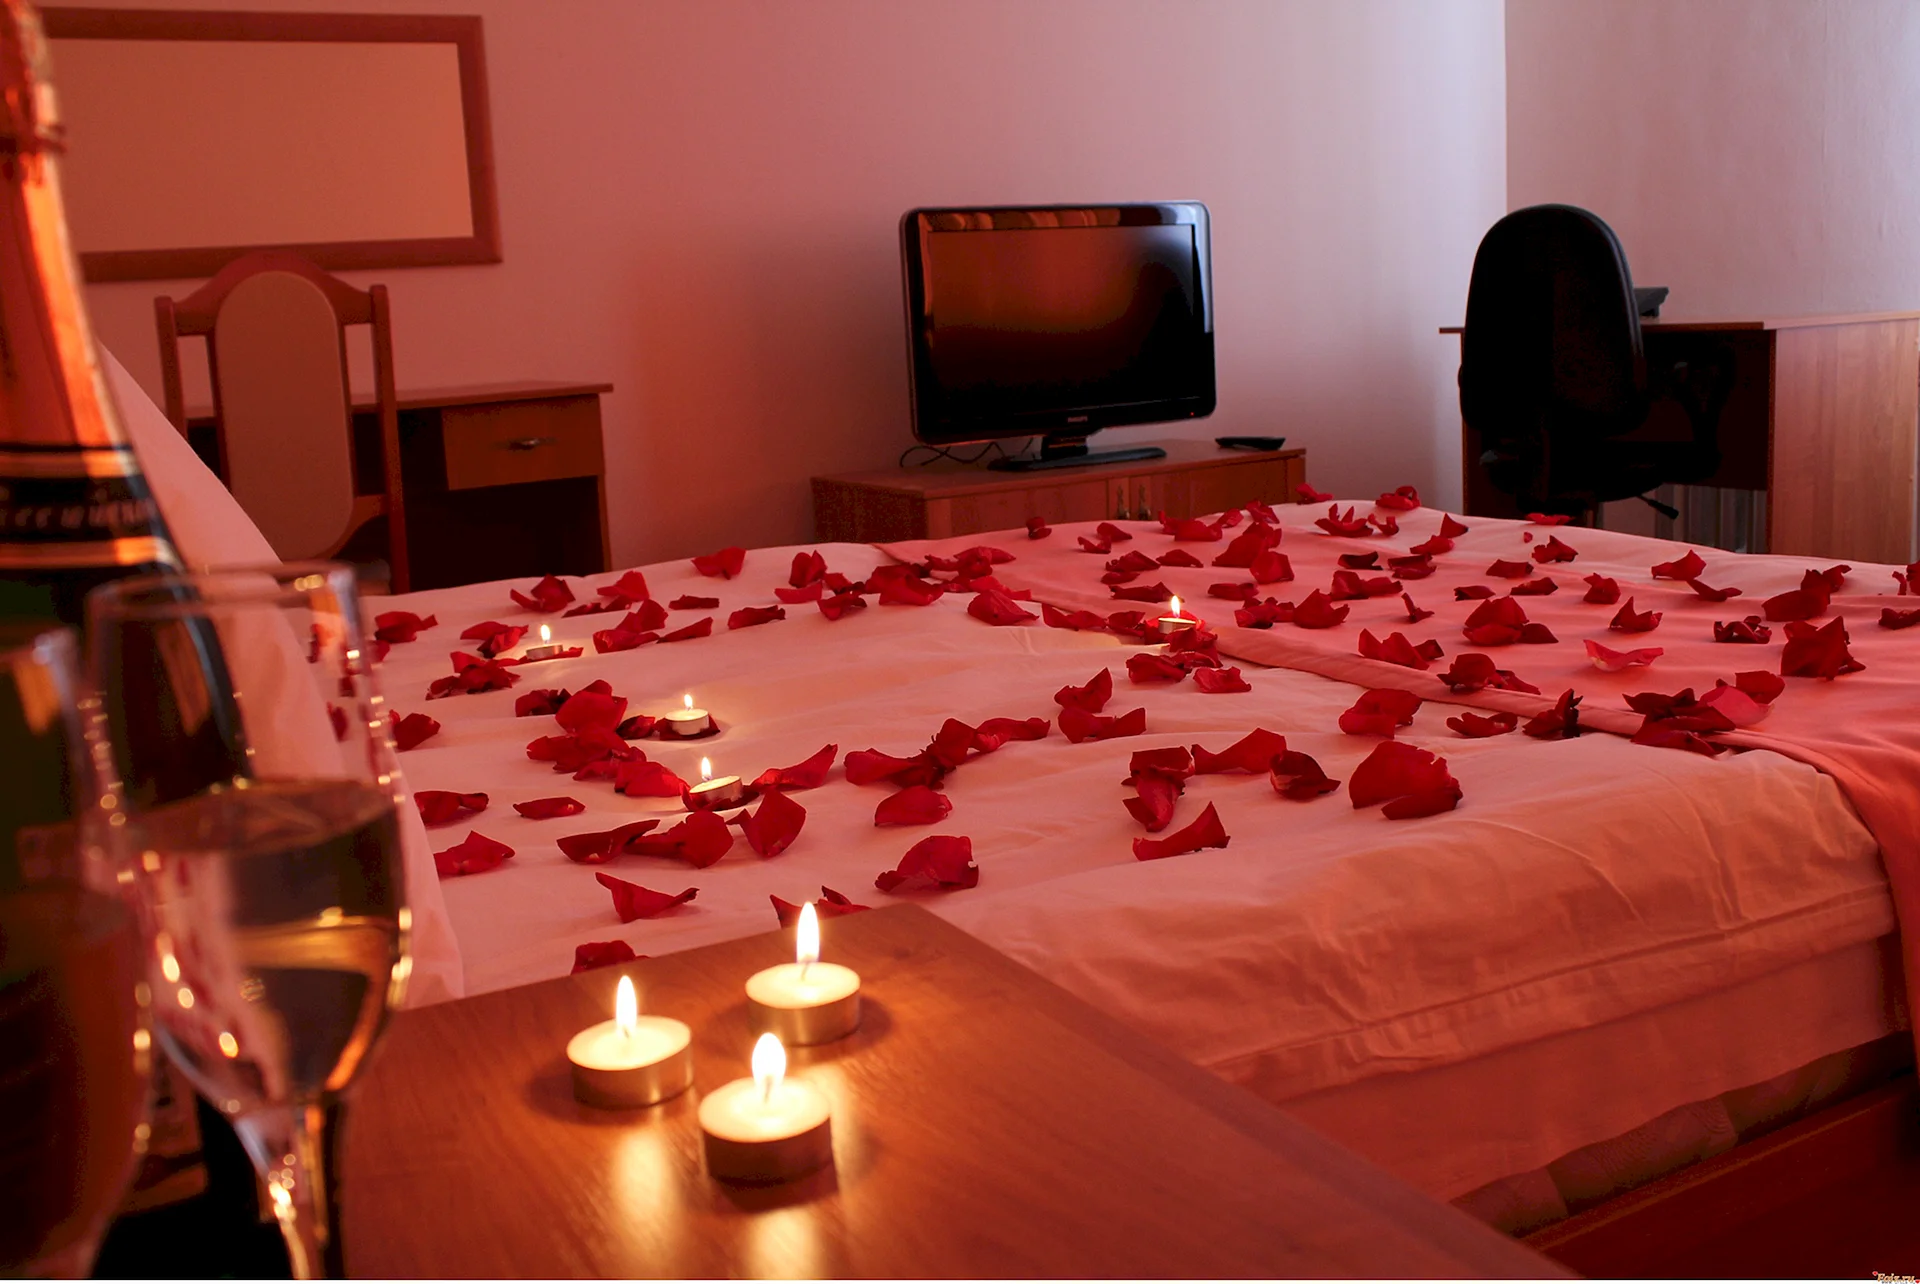 Romantic Night Bed Wallpaper